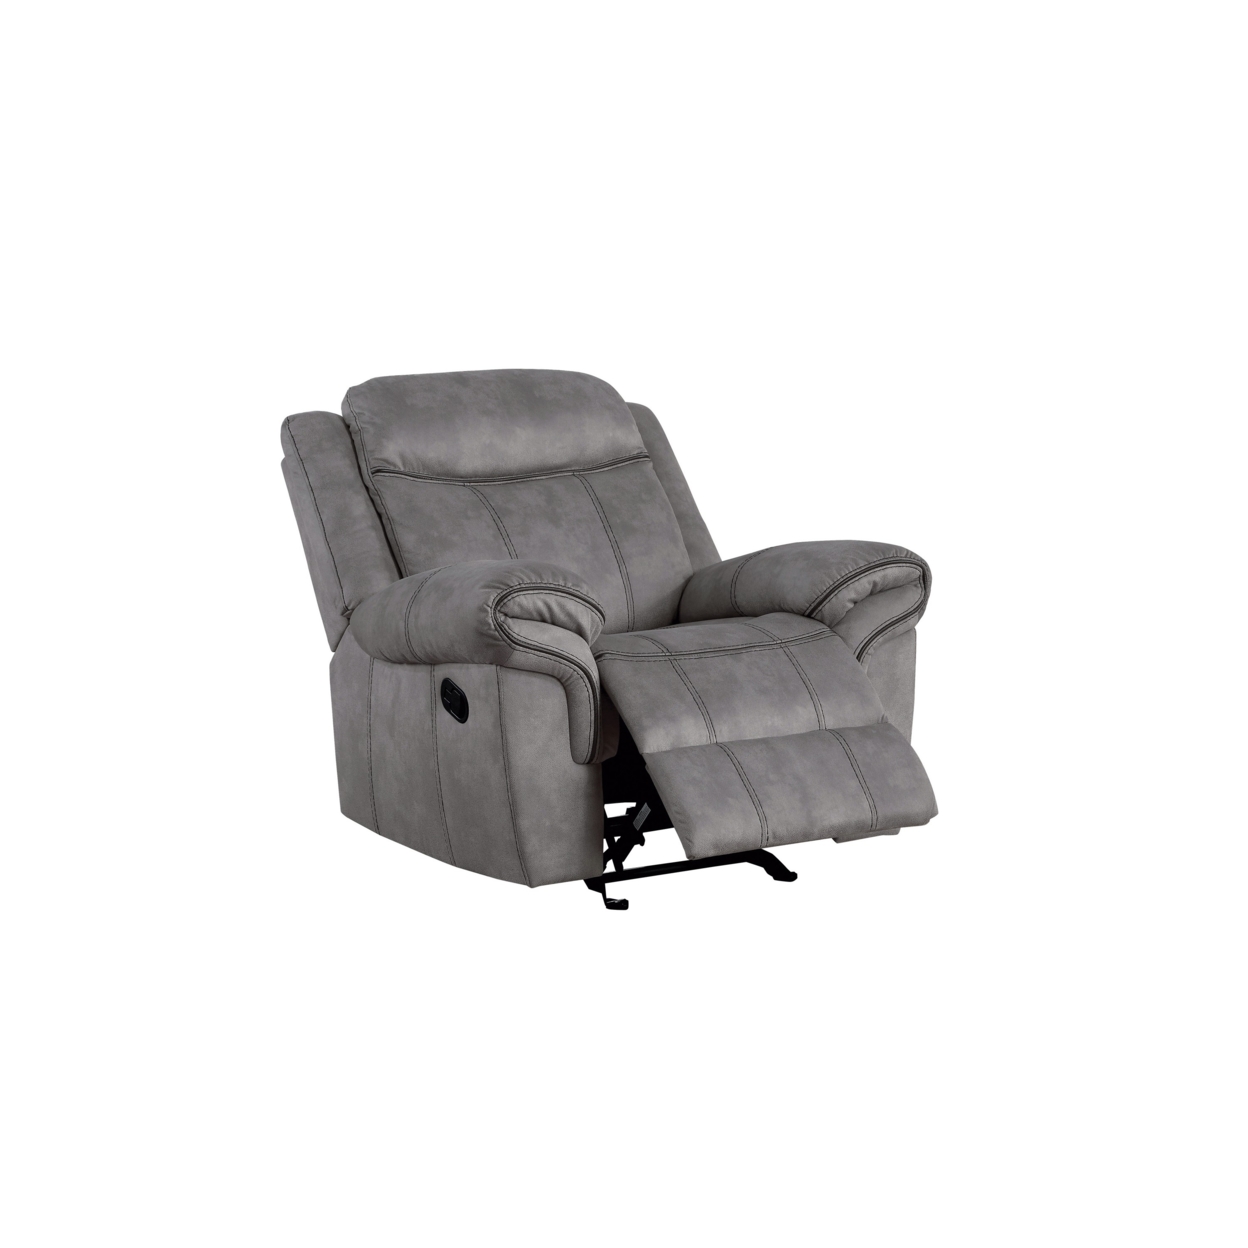 42 Inch Recliner Club Chair, Split Back, Pillow Top, Light Gray Fabric